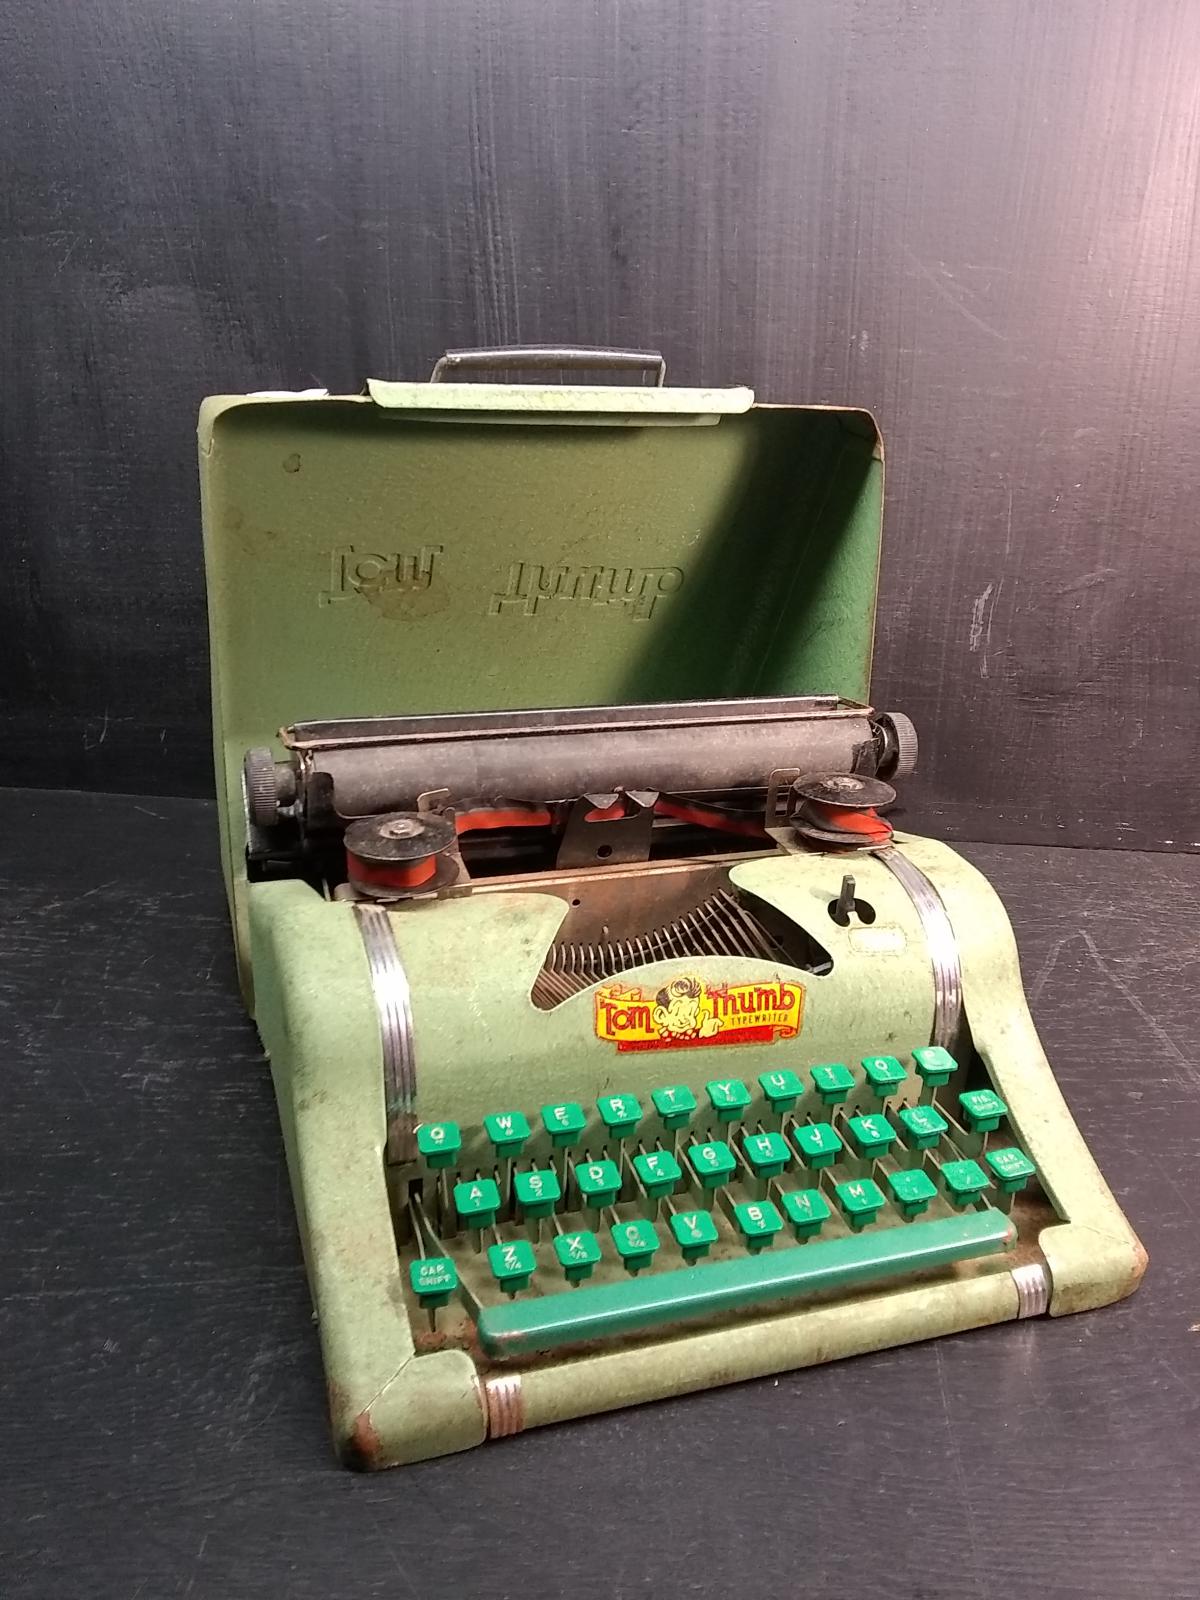 Beerwin Superior Toy Typewriter